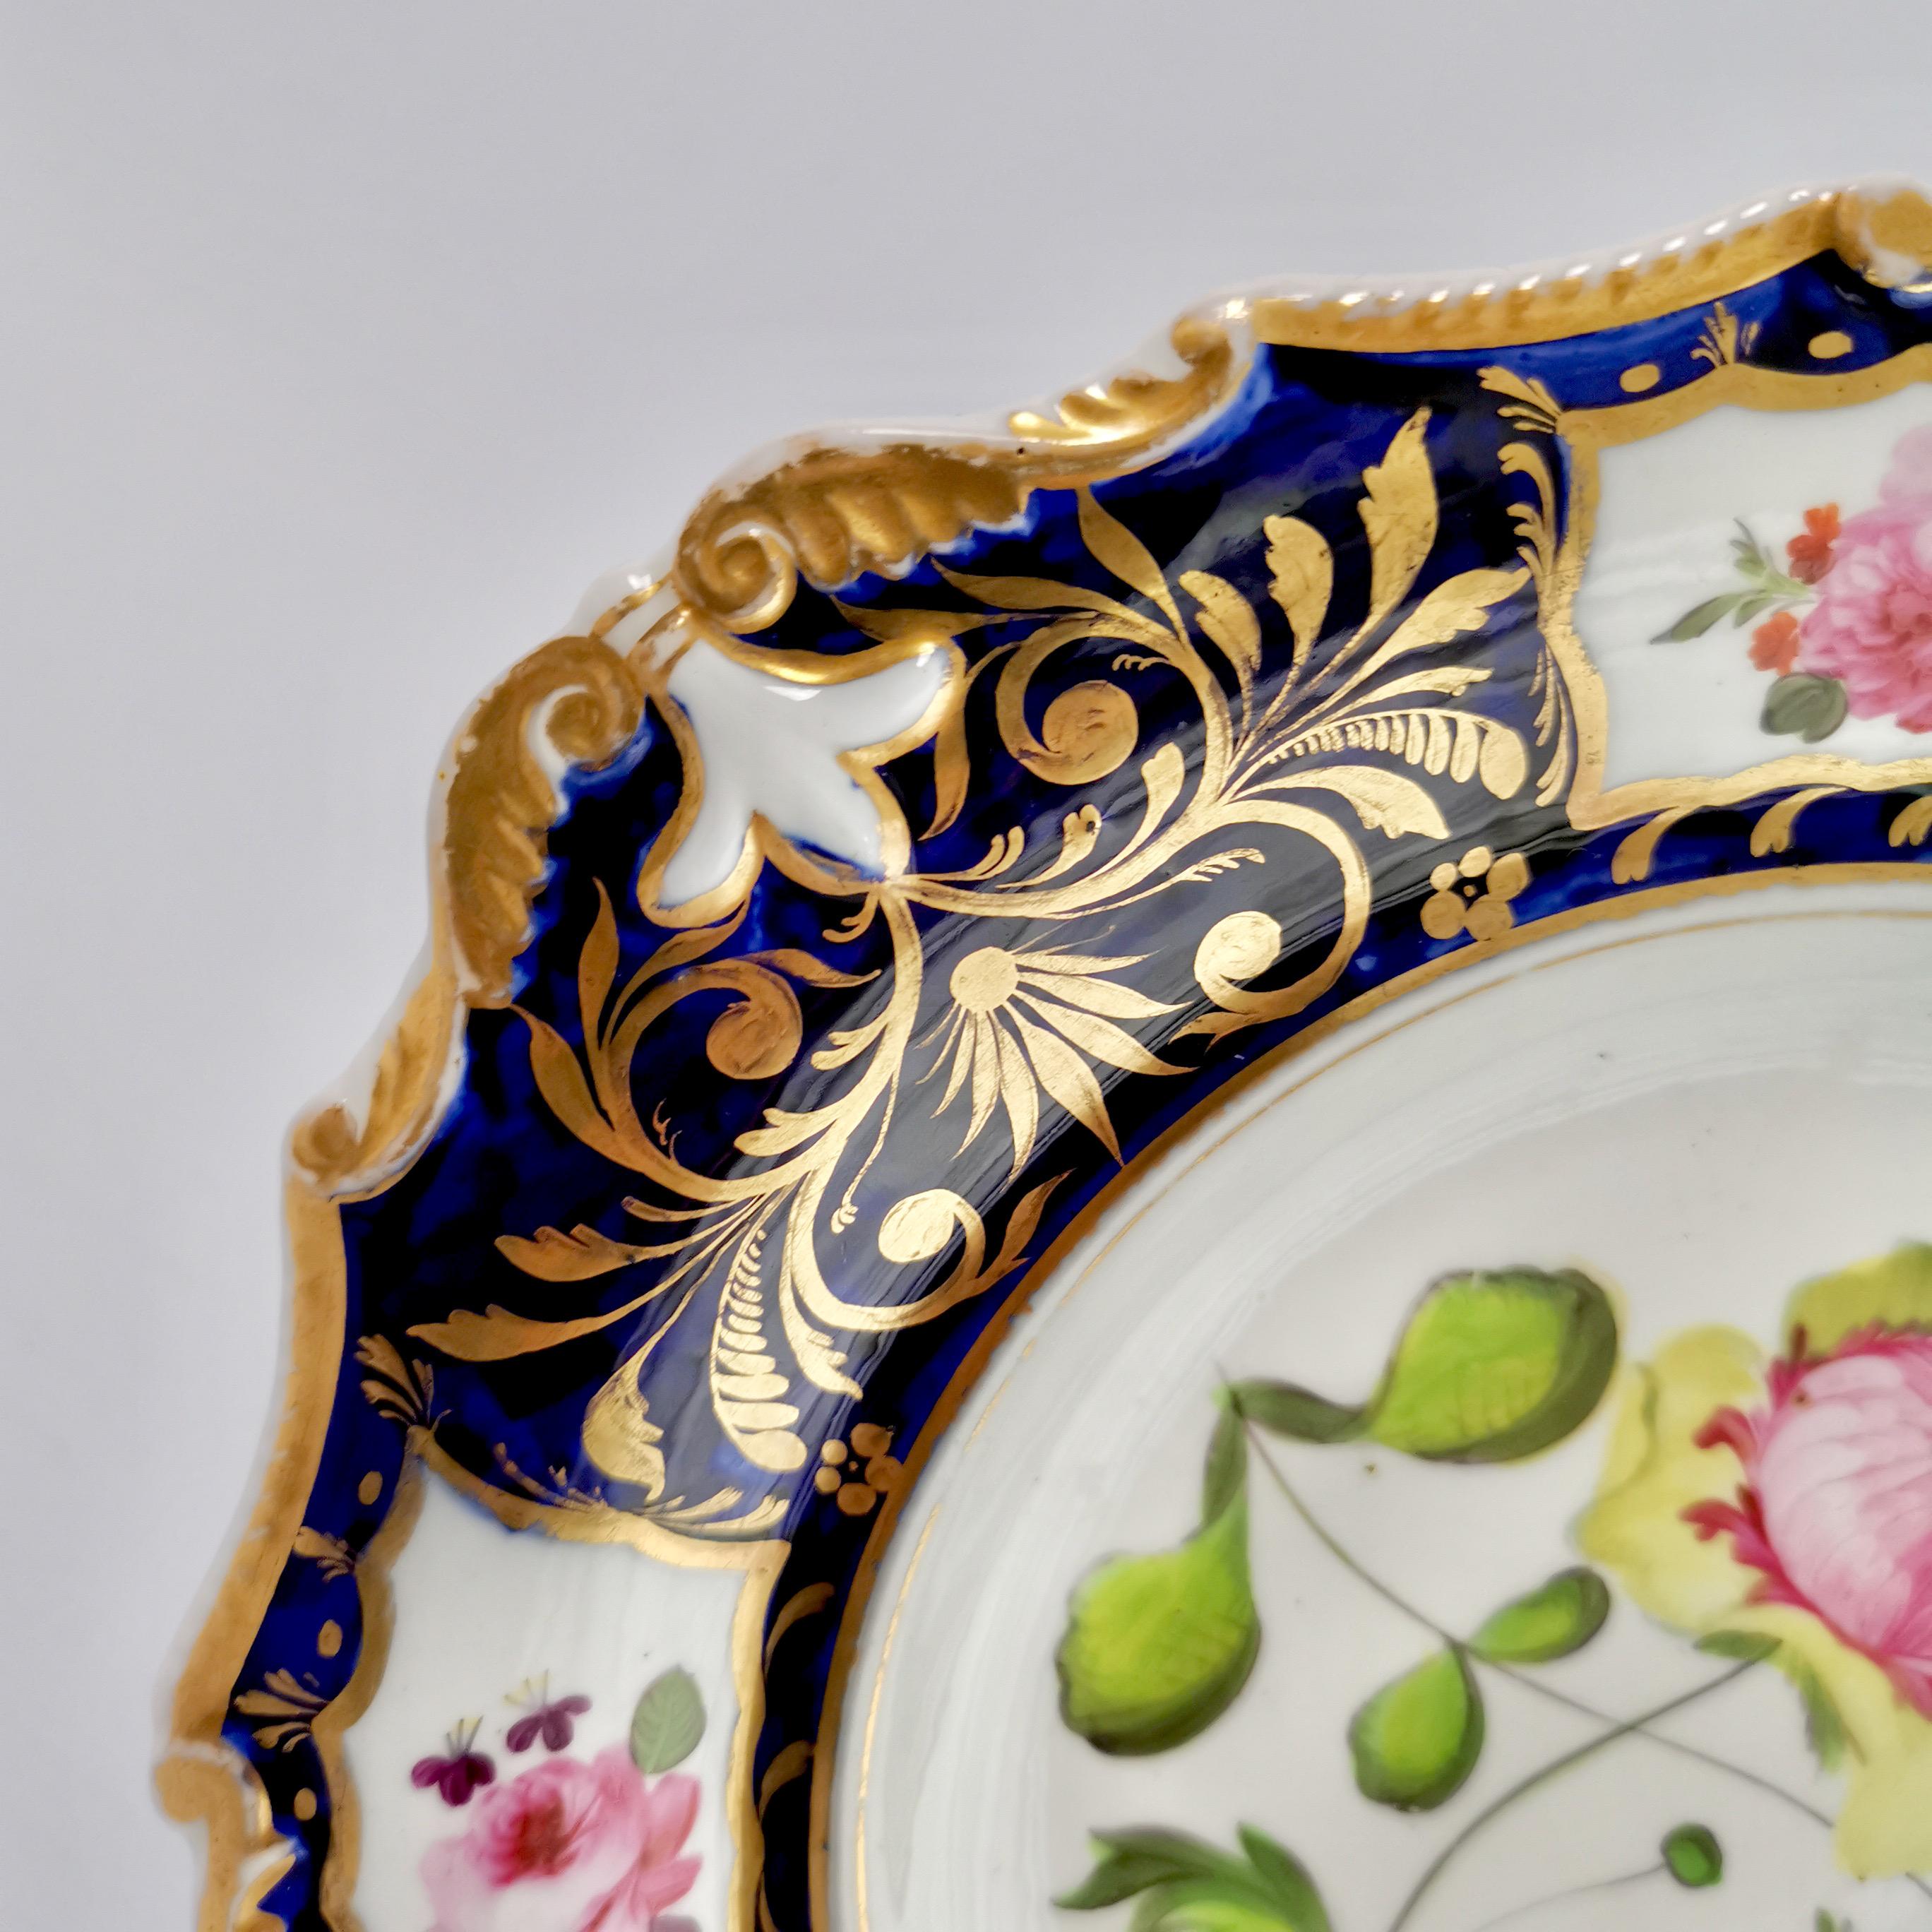 Machin Porcelain Plate, Cobalt Blue, Gilt and Flowers, Regency, circa 1820 2